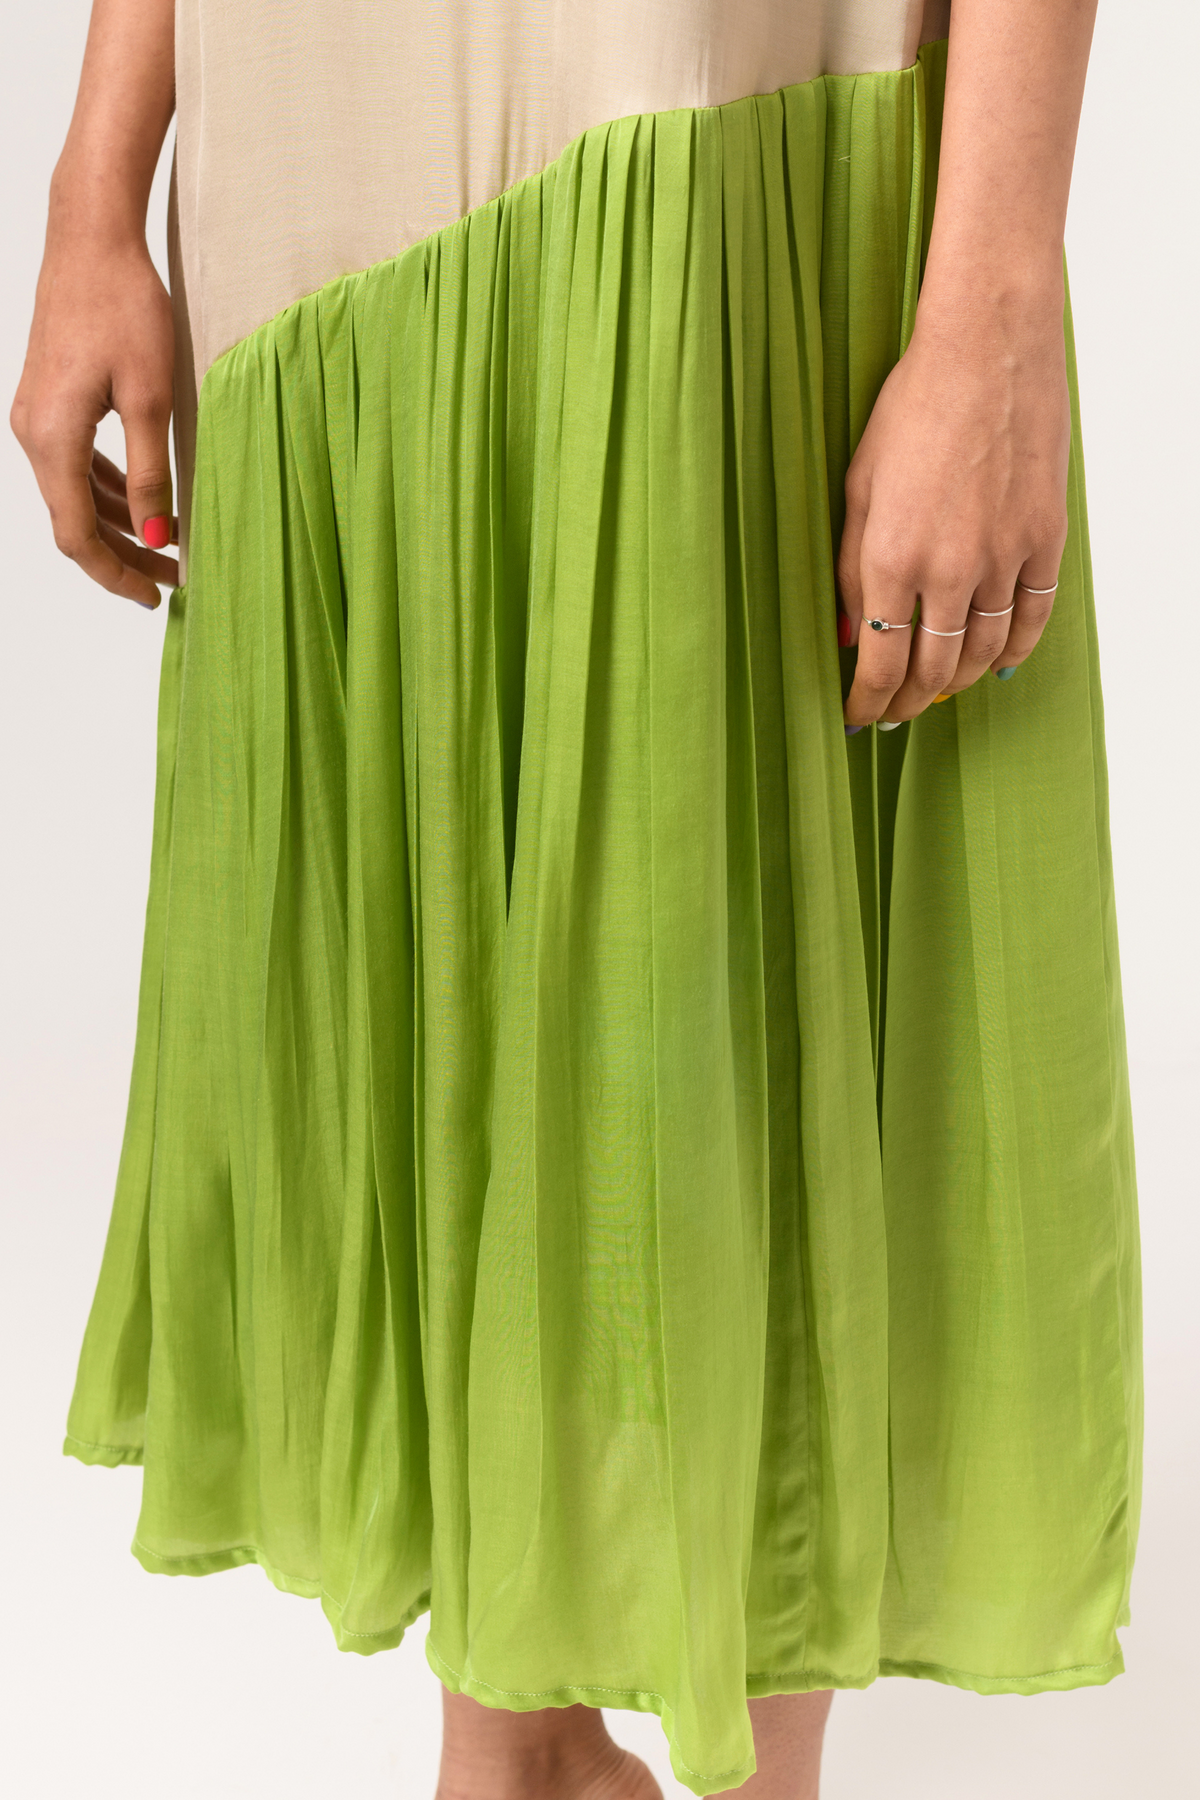 Ecru green gather dress